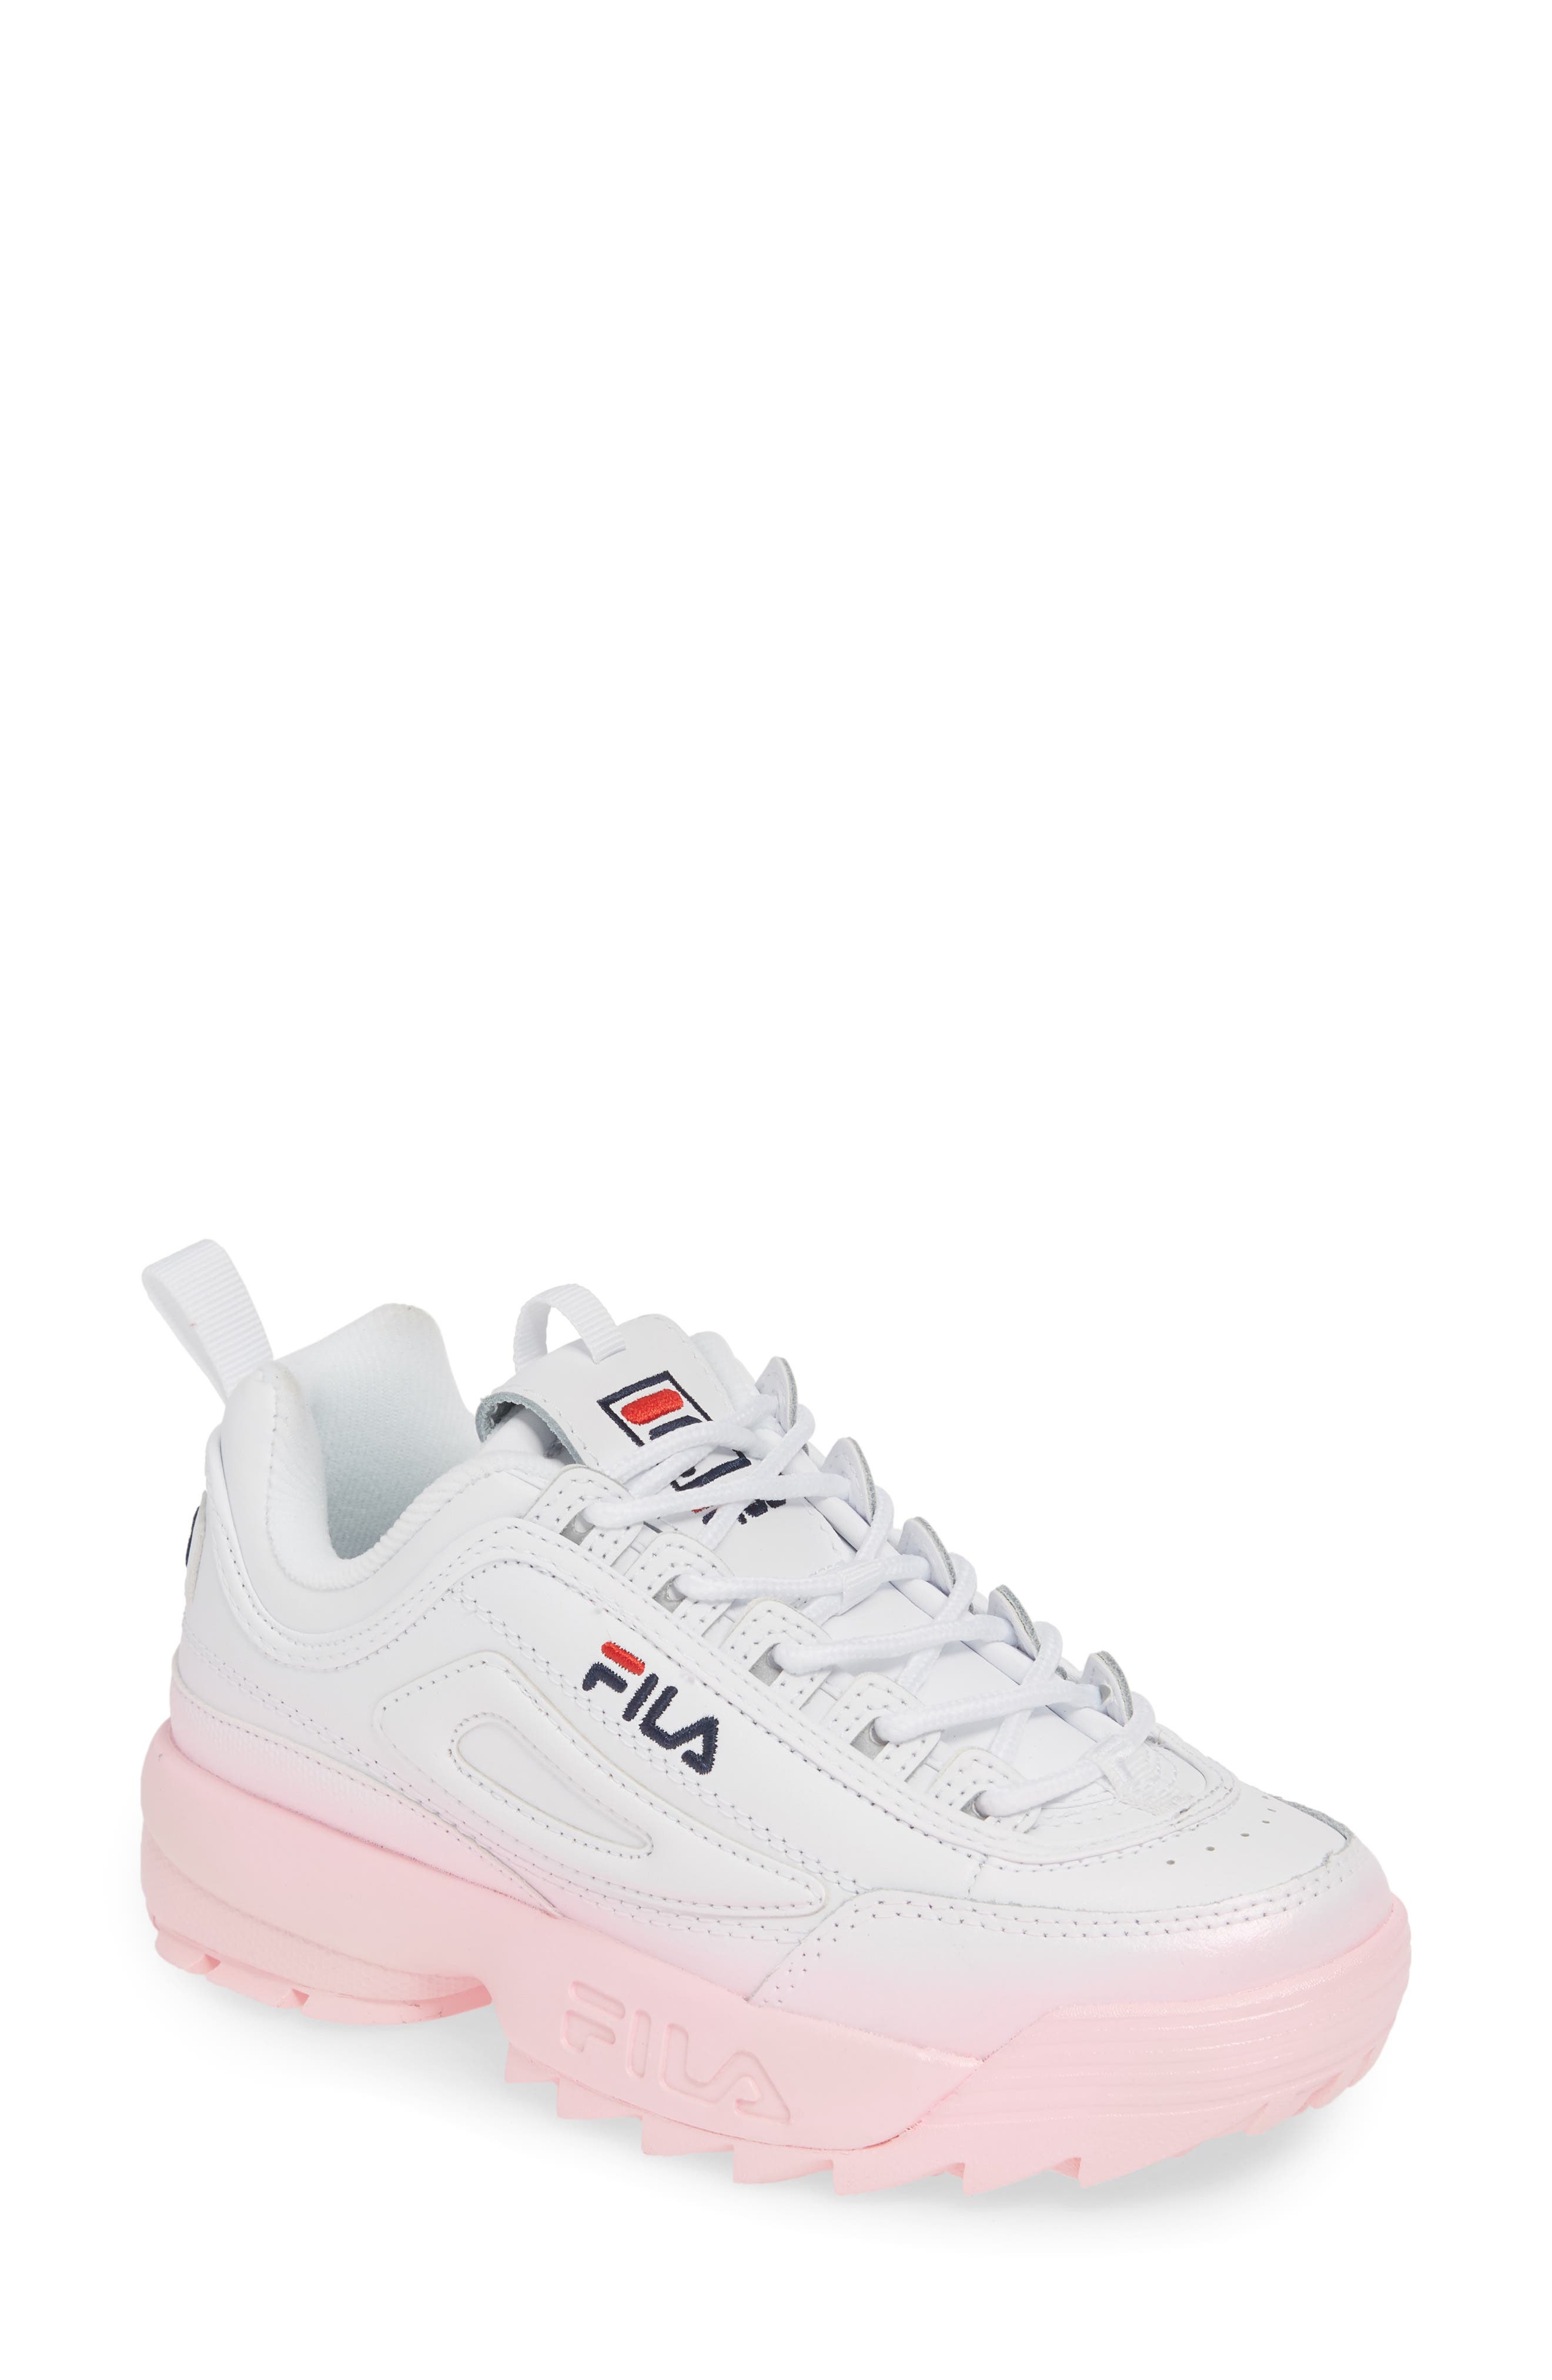 FILA Disruptor II Premium Fade Sneaker 